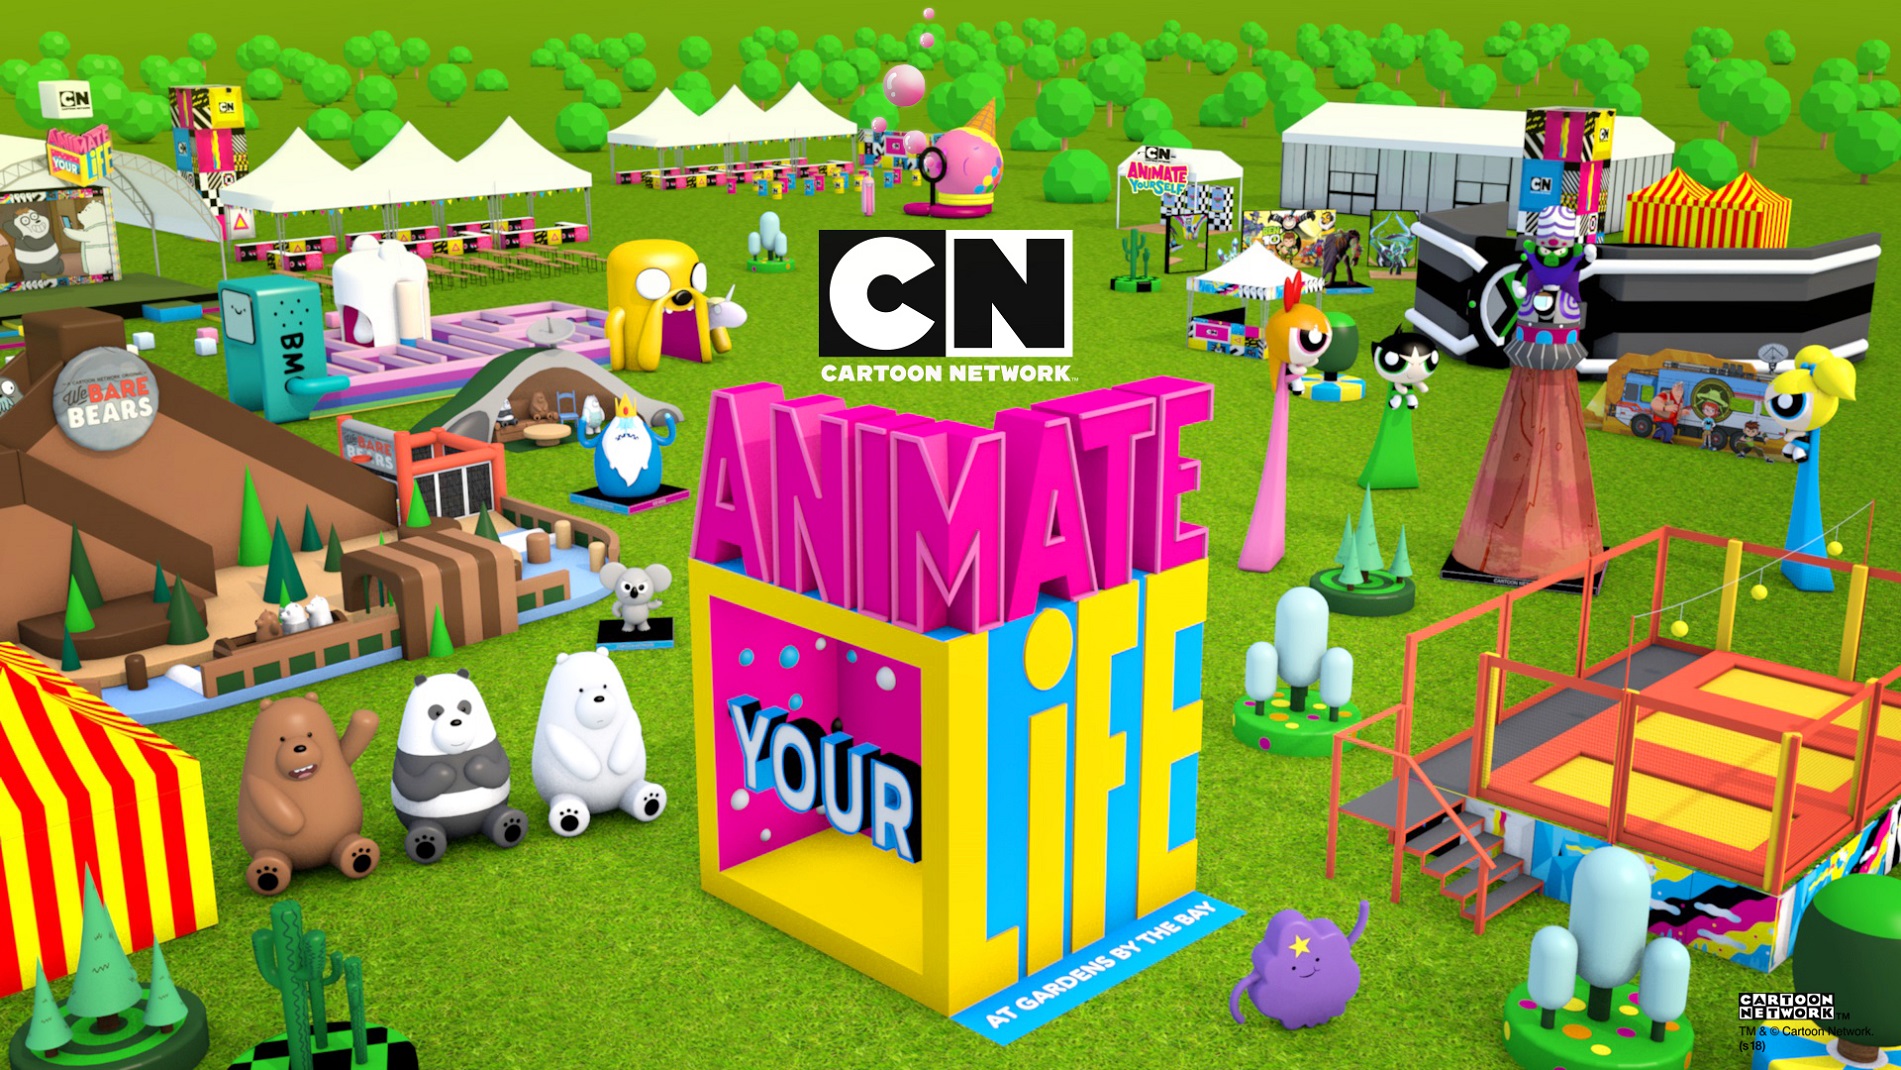 Get Animated with Cartoon Network in Singapore - Gaya Travel Magazine